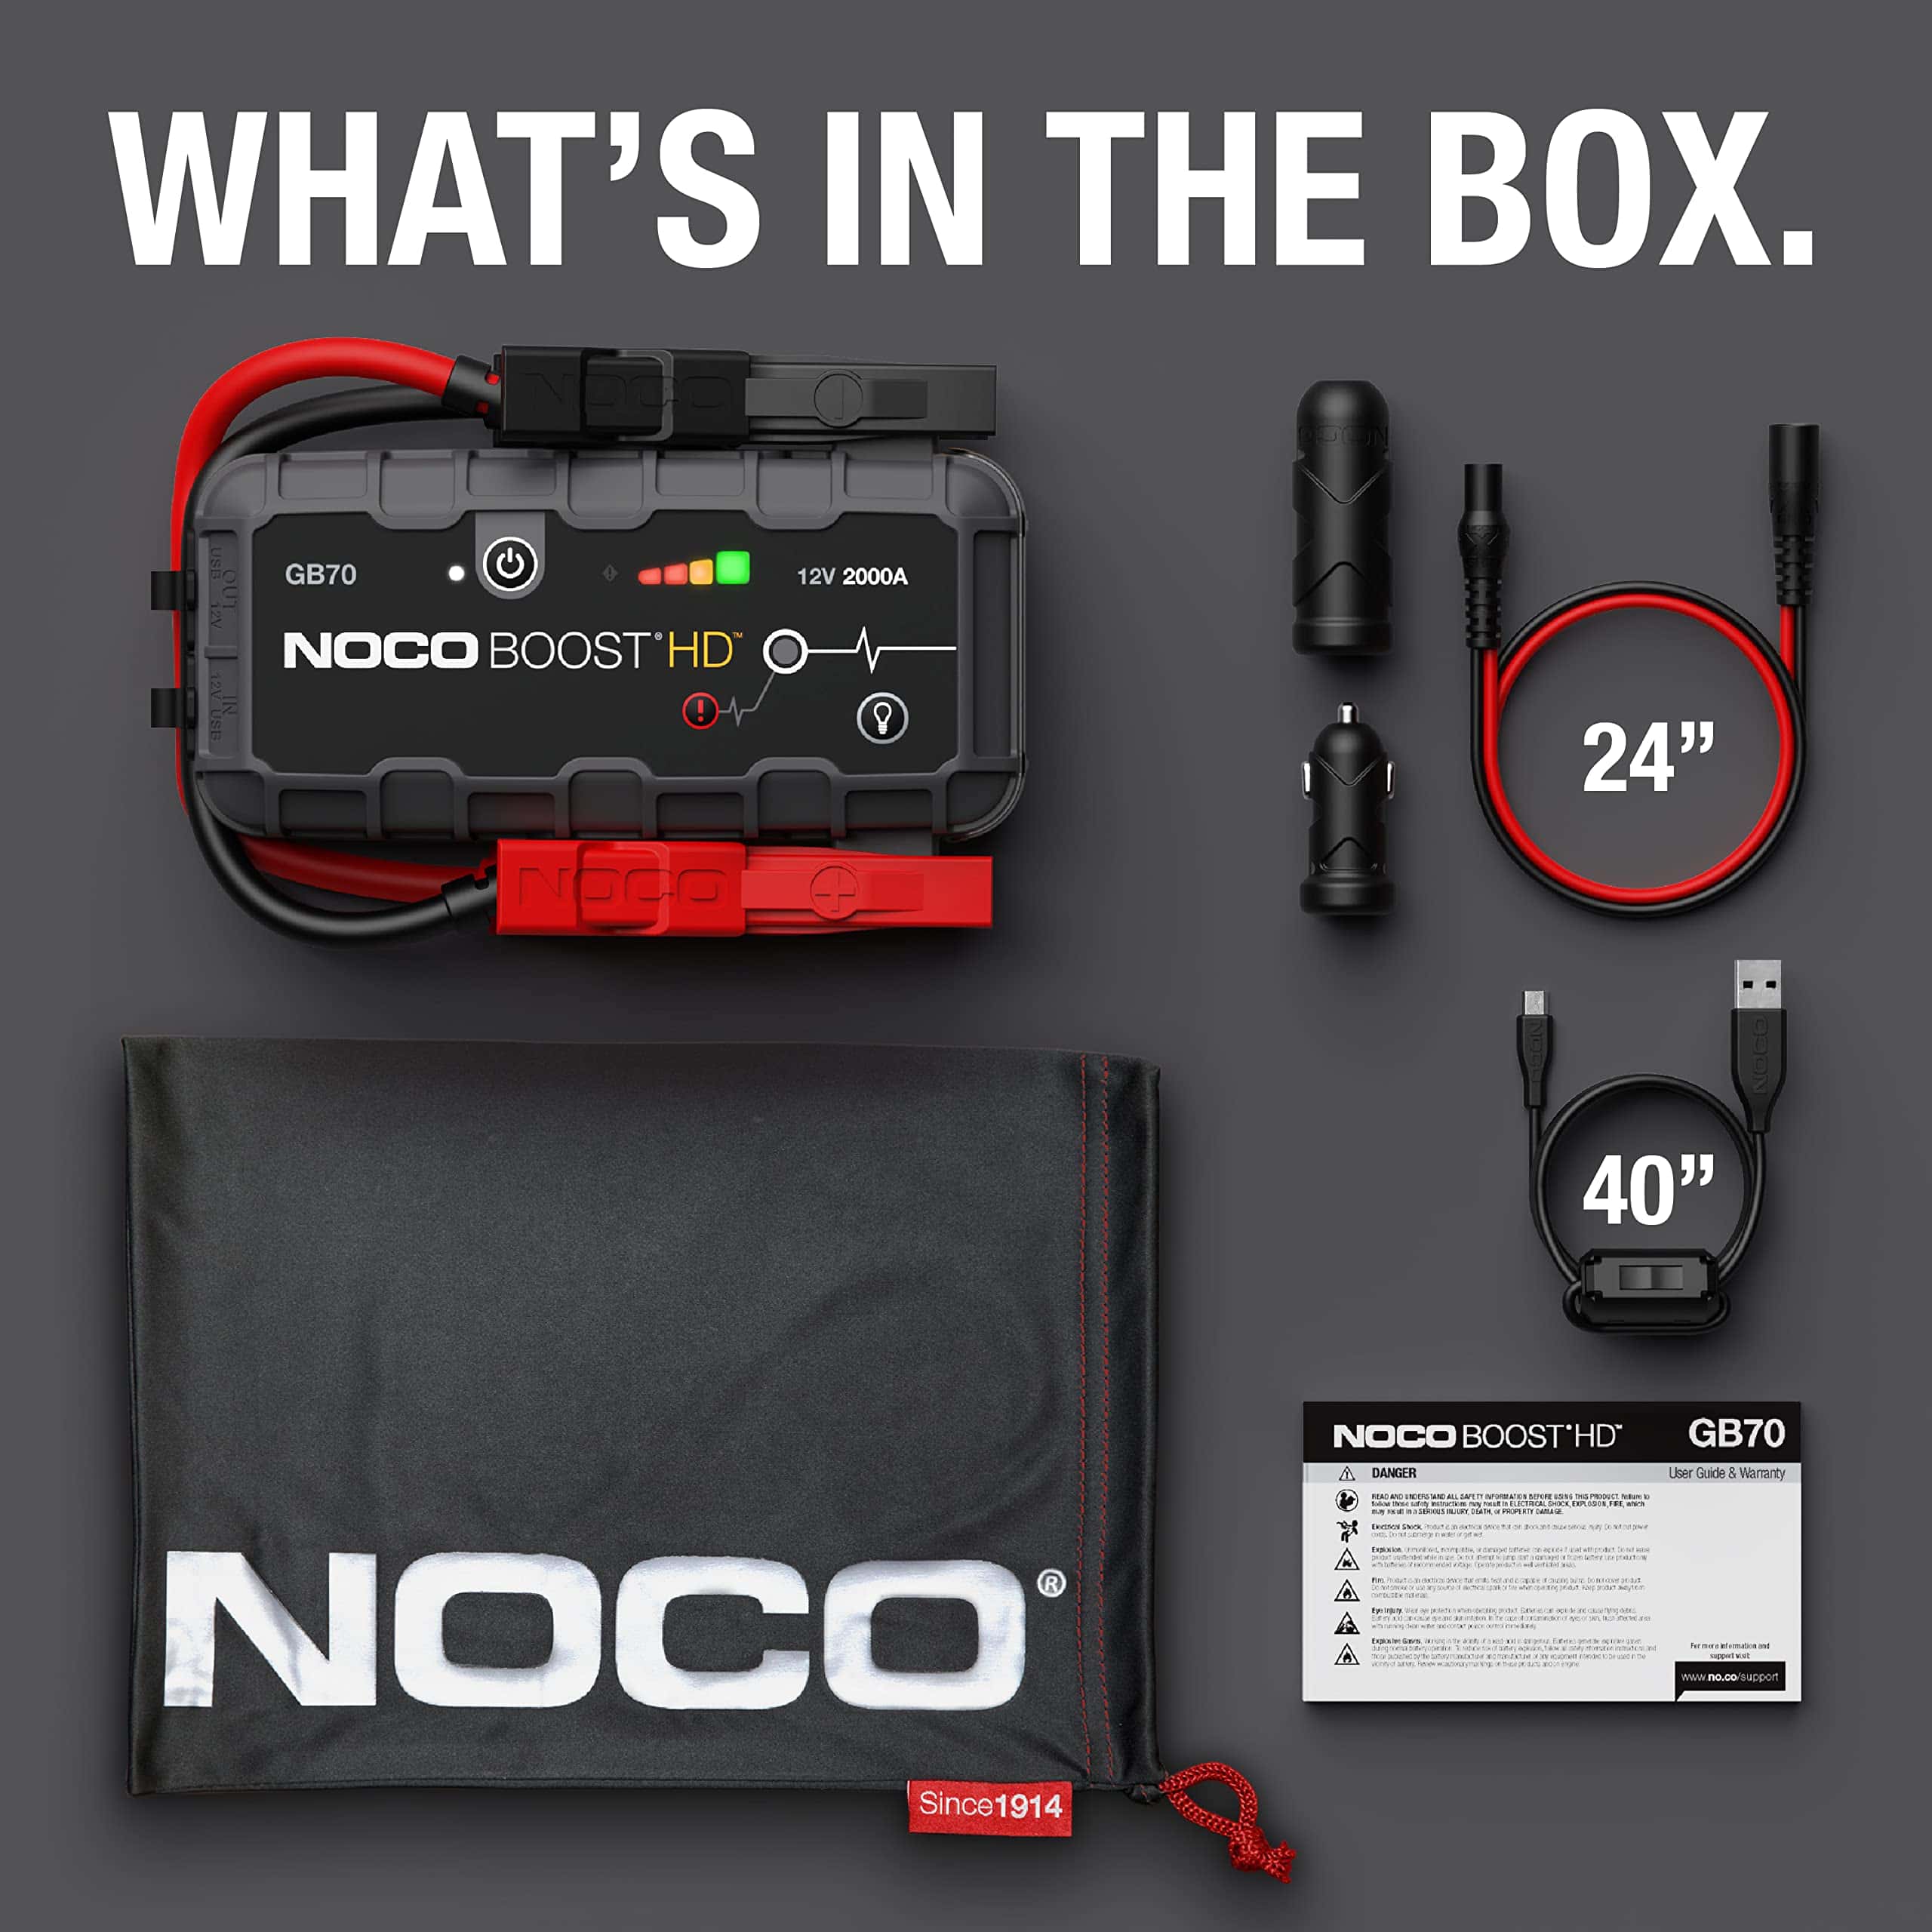 NOCO Boost HD GB70 2000A UltraSafe Car Battery Jump Starter, 12V Battery  Booster Pack